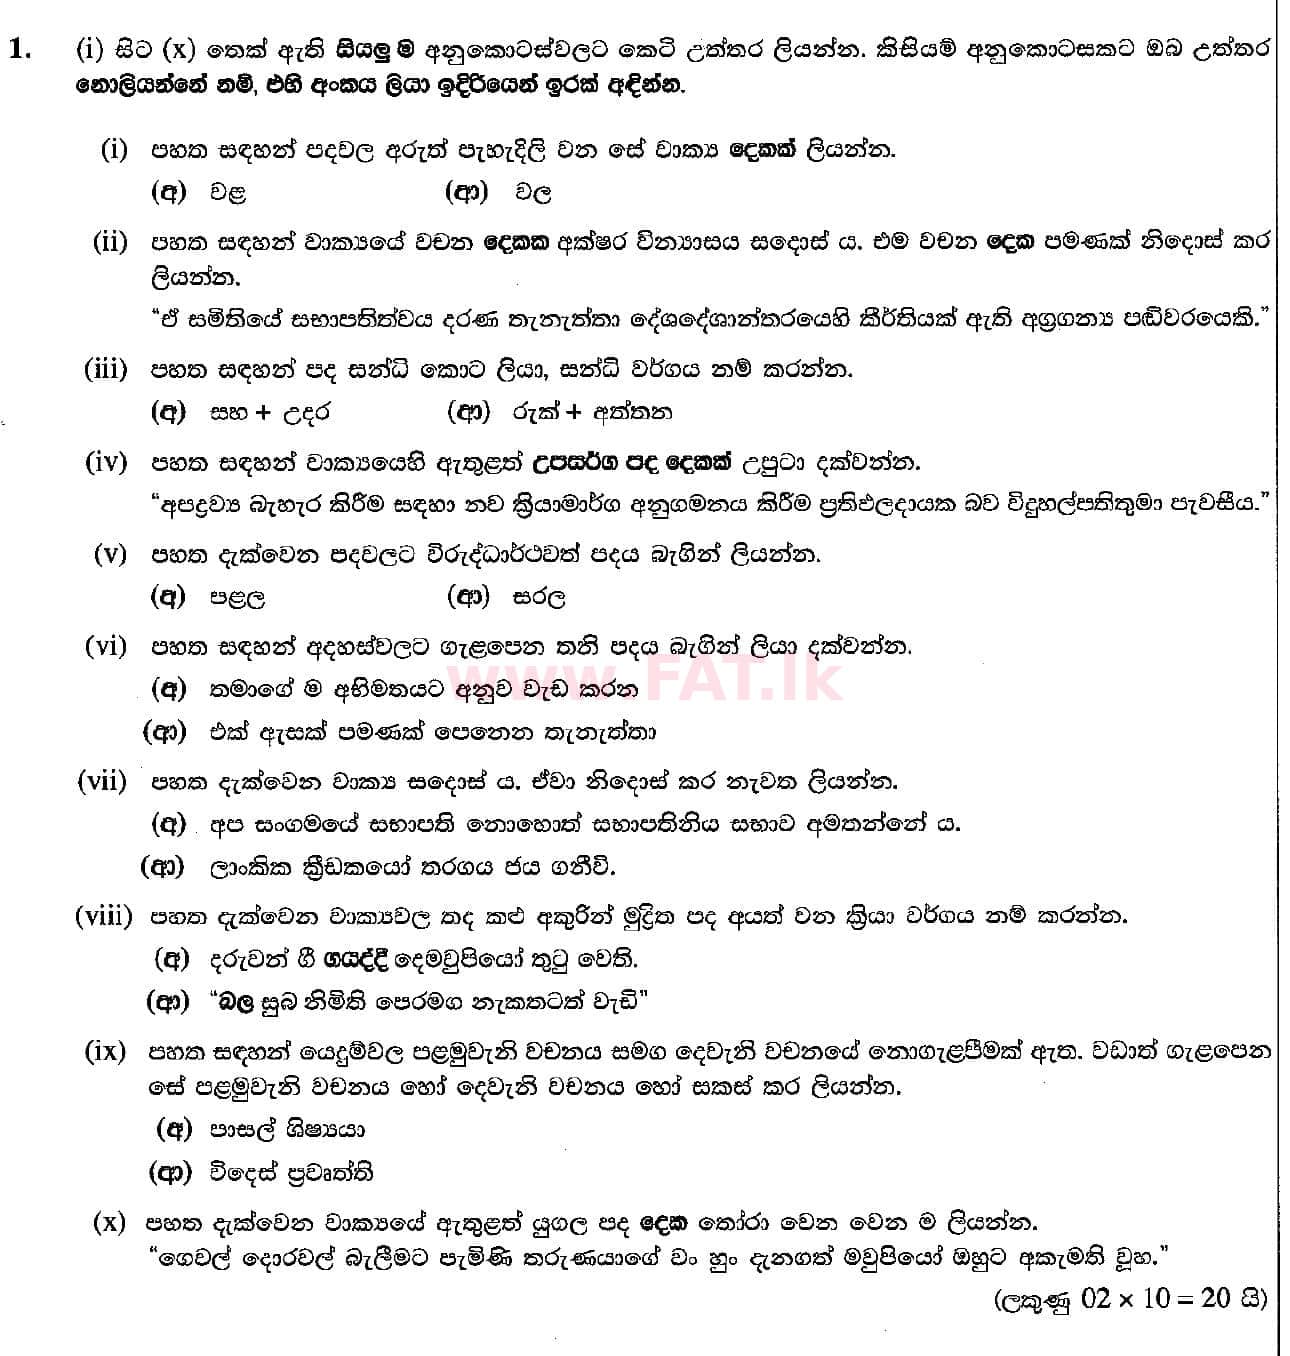 National Syllabus : Ordinary Level (O/L) Sinhala Language and Literature - 2018 December - Paper II (සිංහල Medium) 1 1